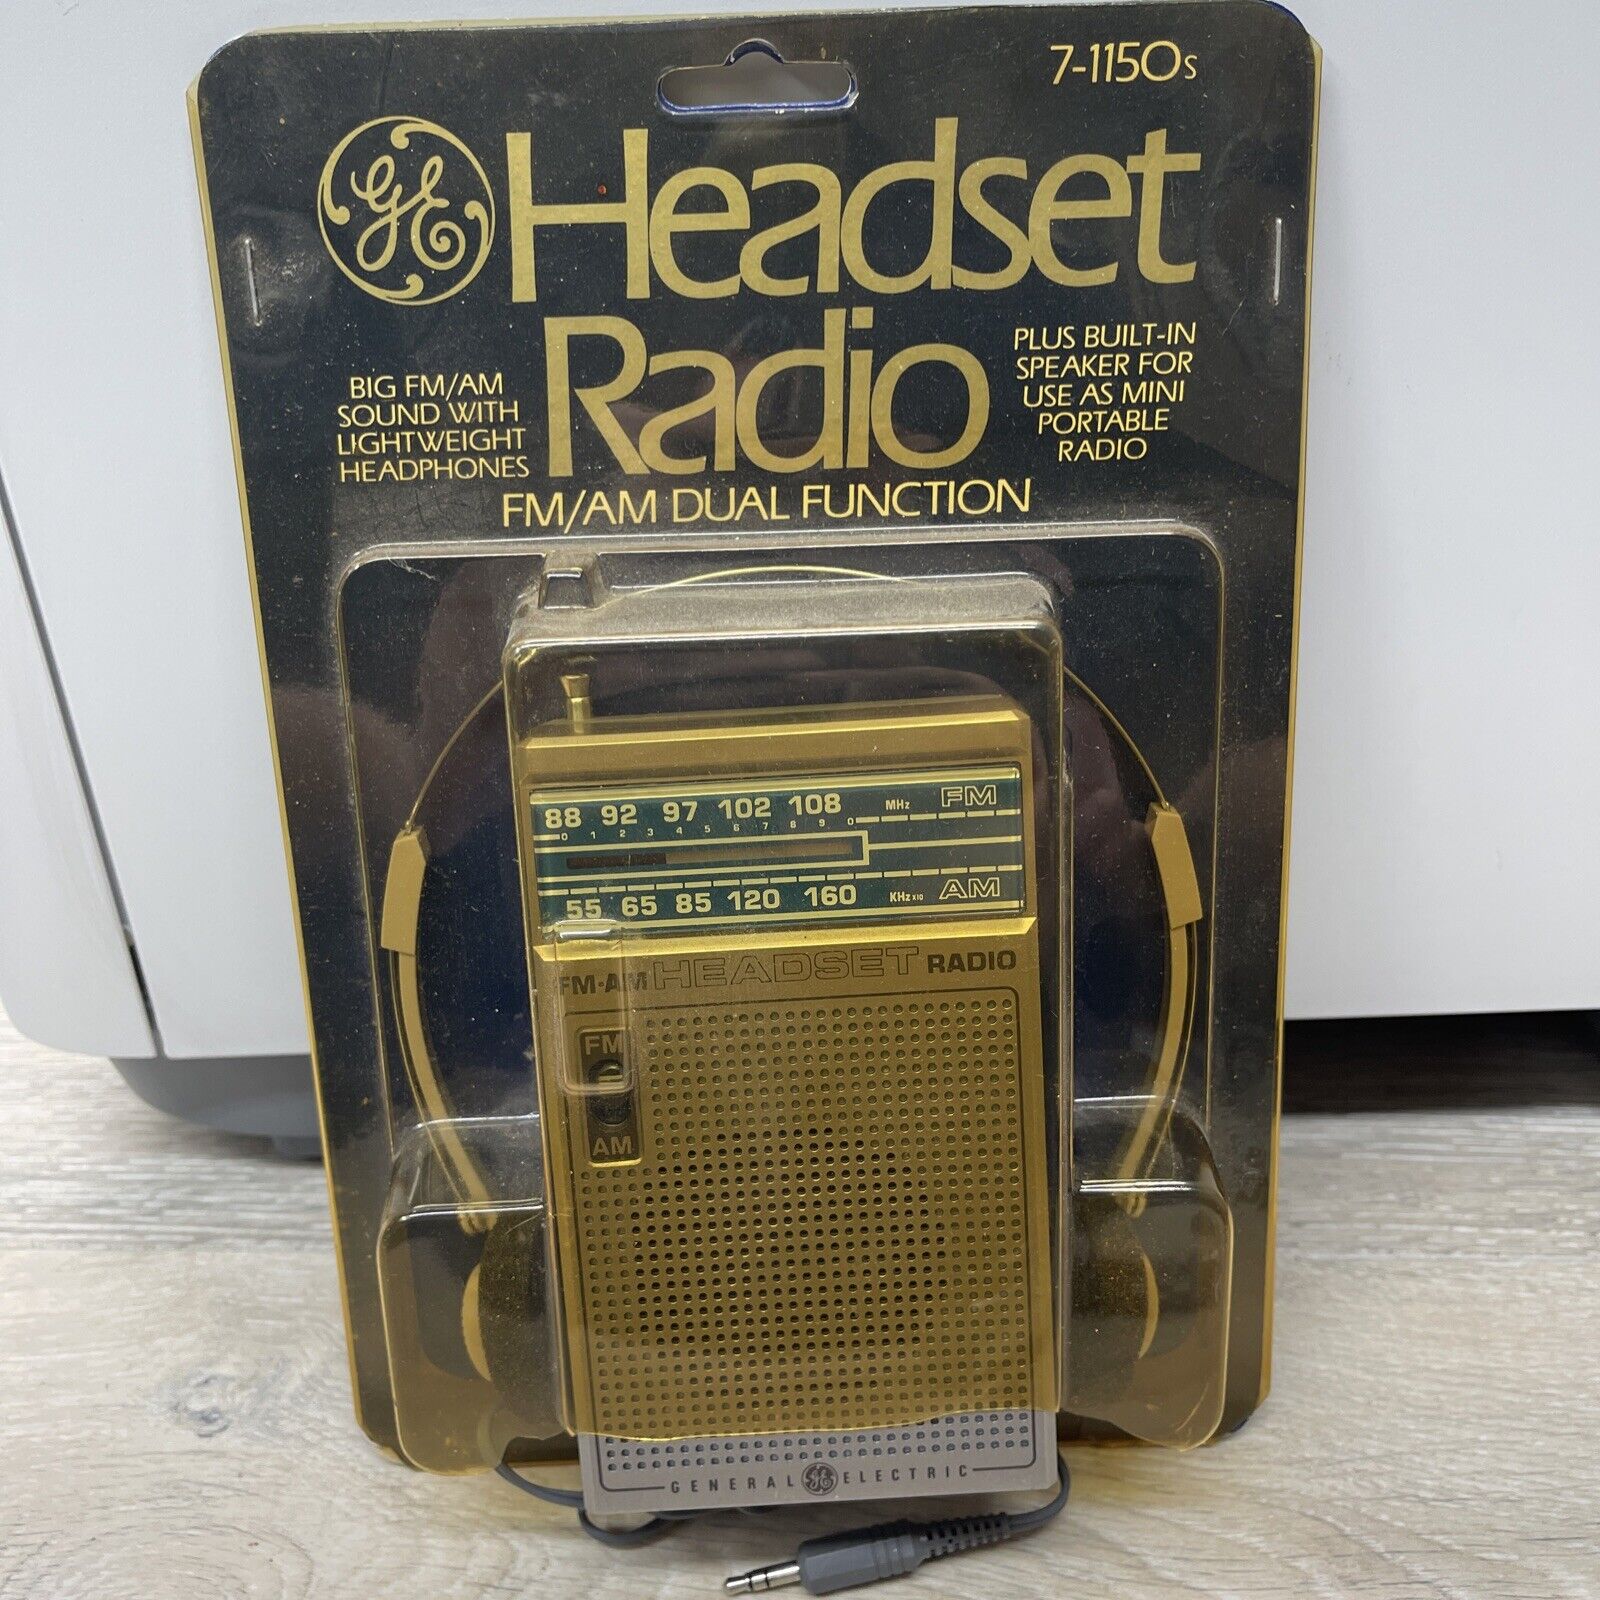 Vintage GE General Electric FM/AM Headset Radio Model 7-1150B TESTED New Openbox